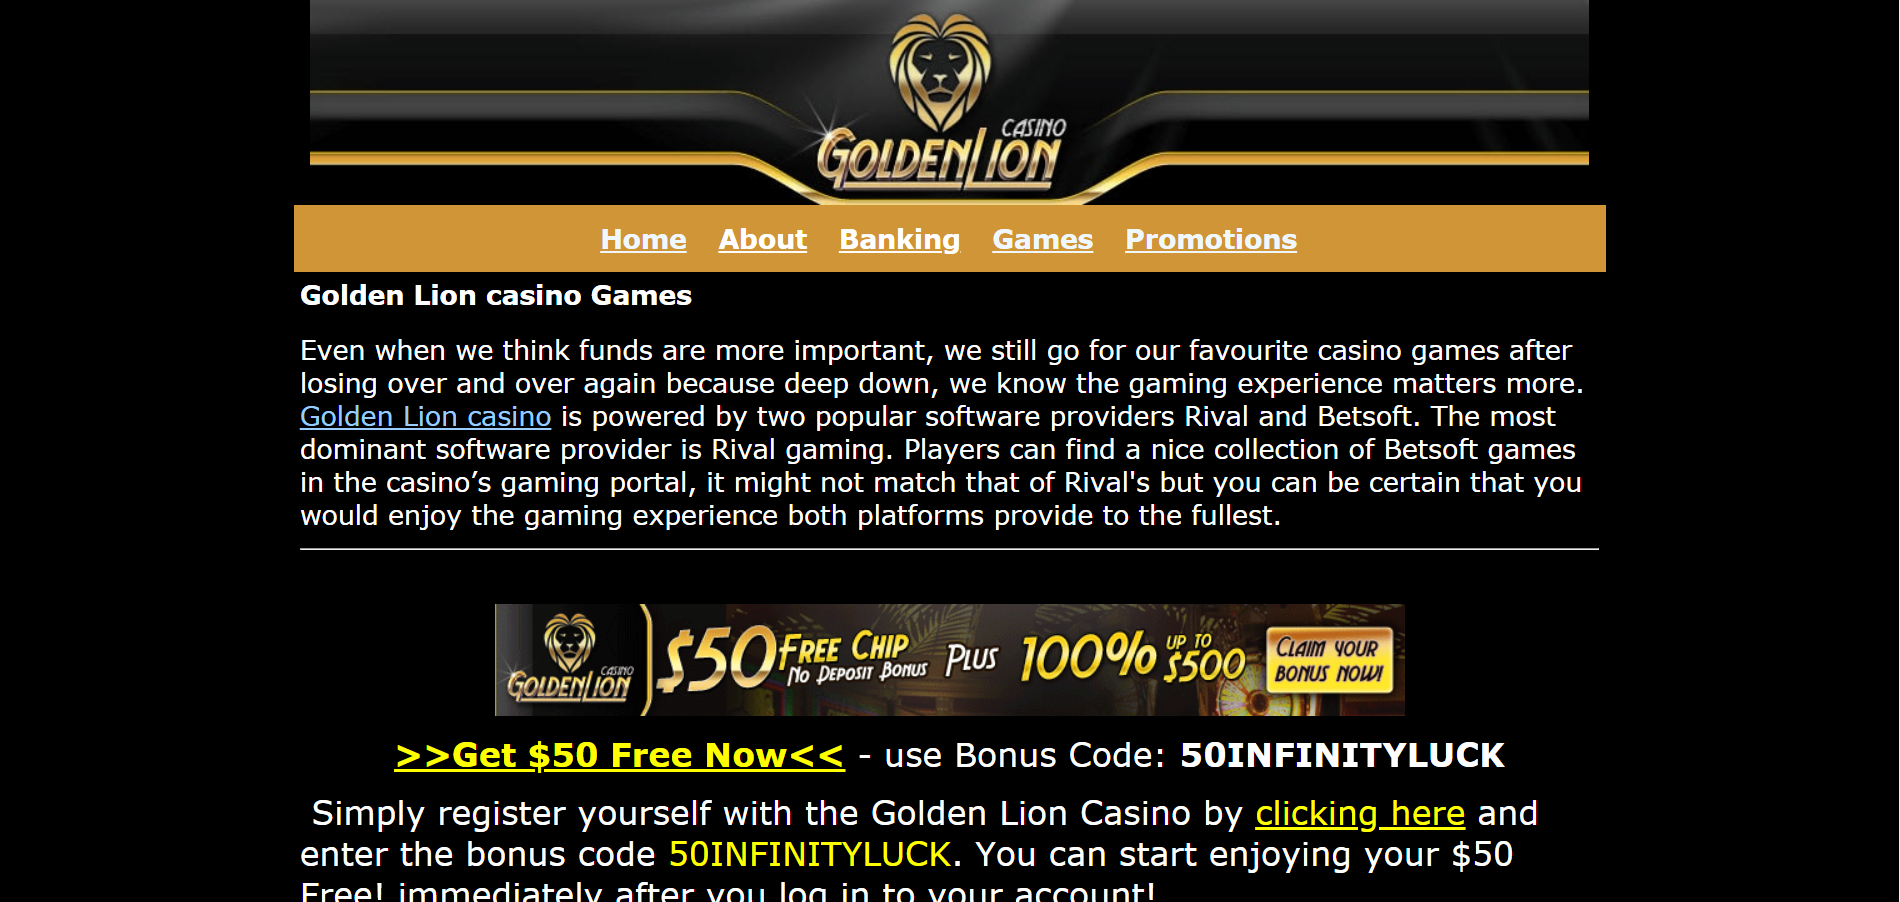 Golden Lion Casino Games